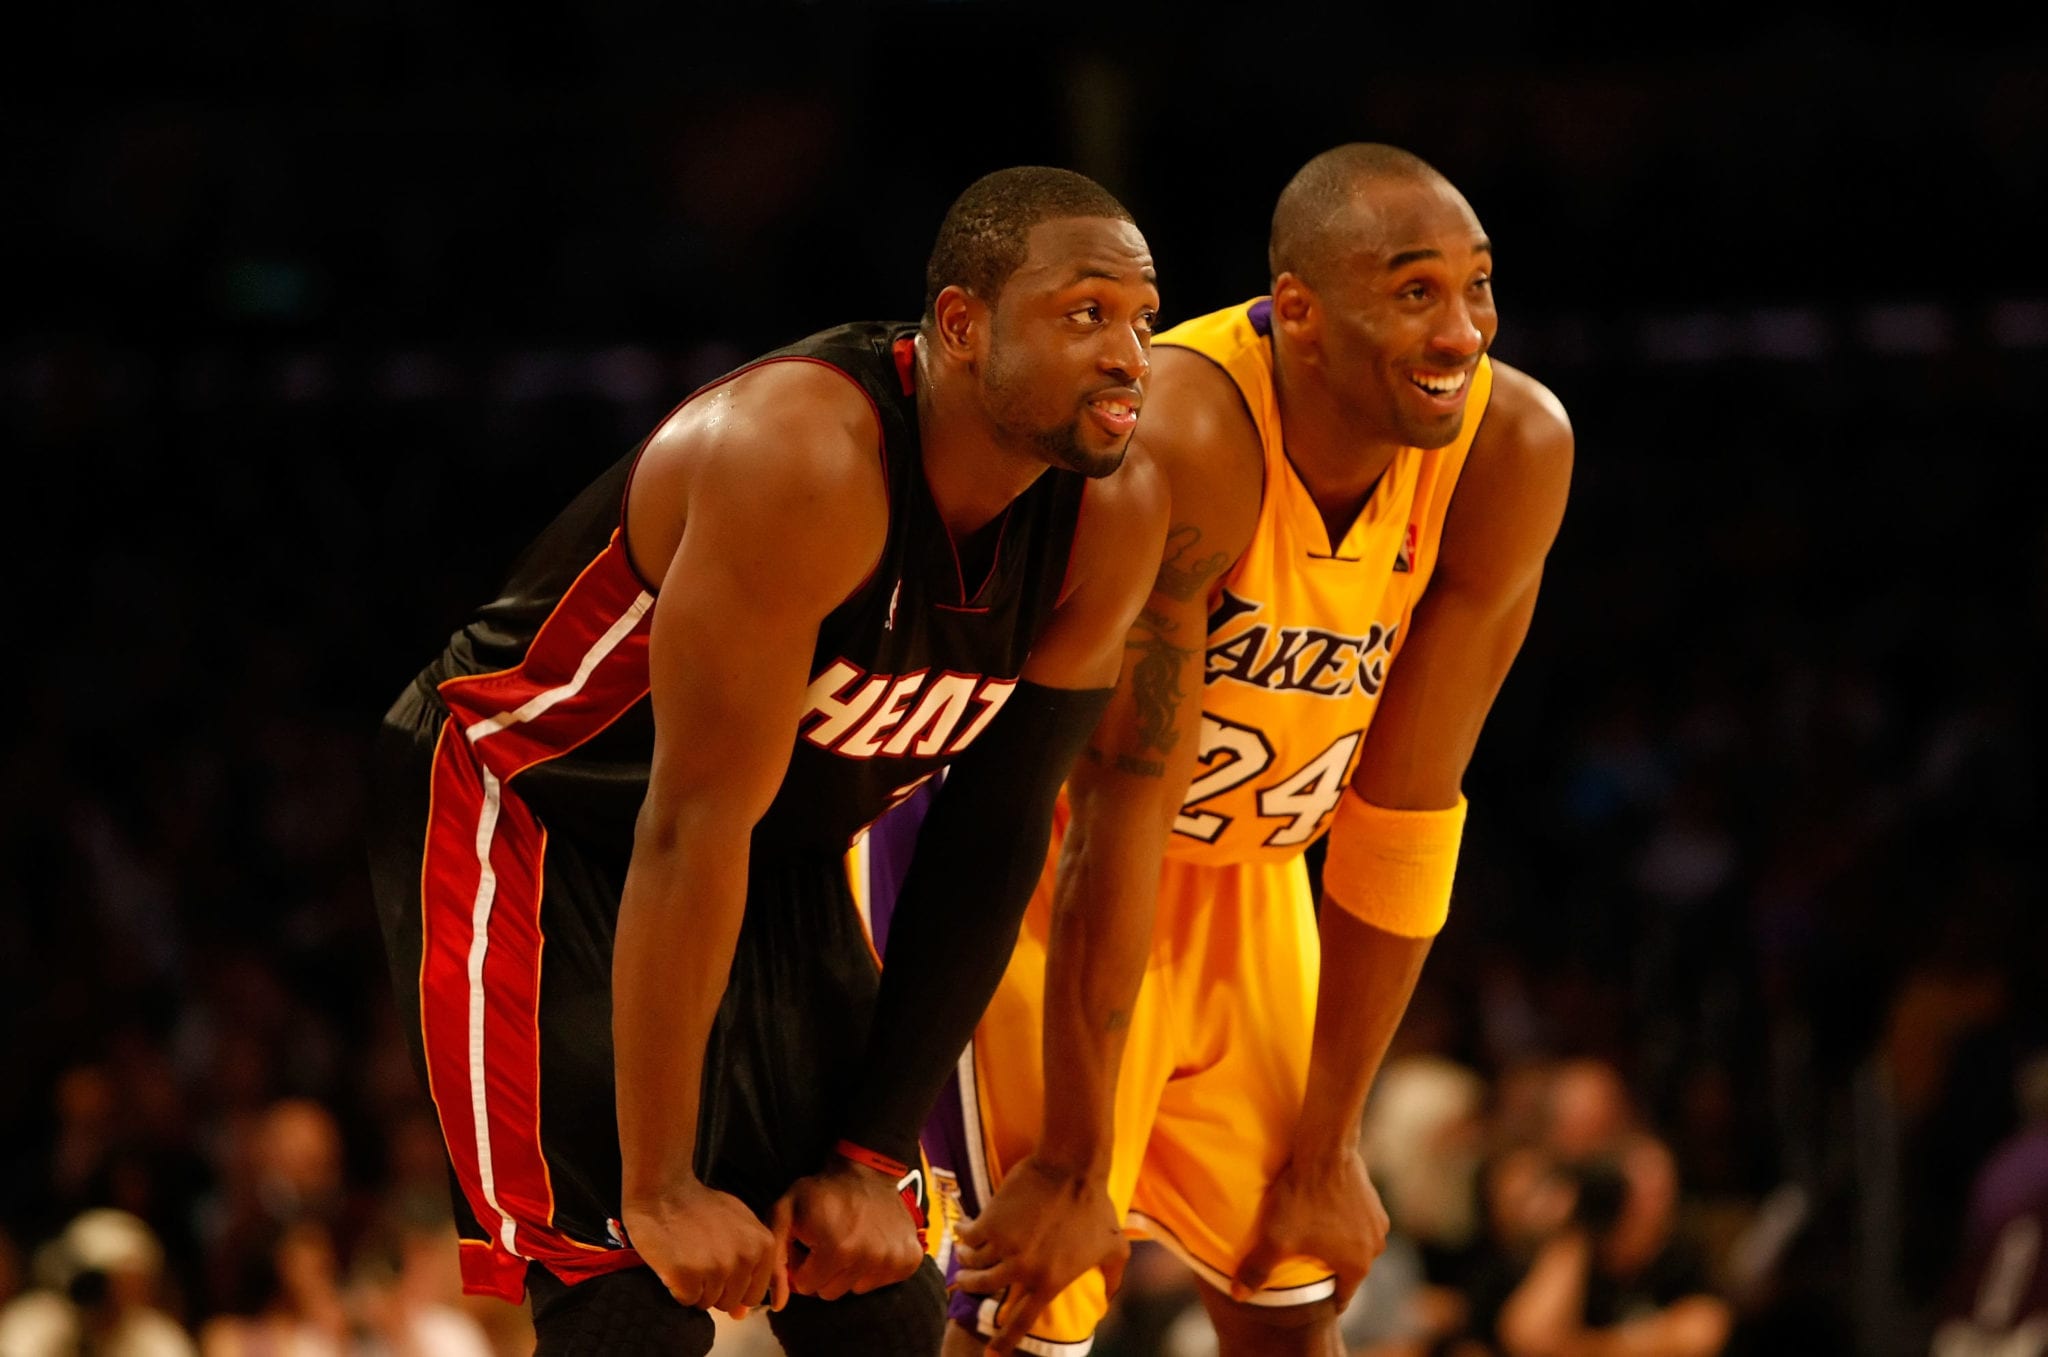 Dwayne Wade and Kobe Bryant